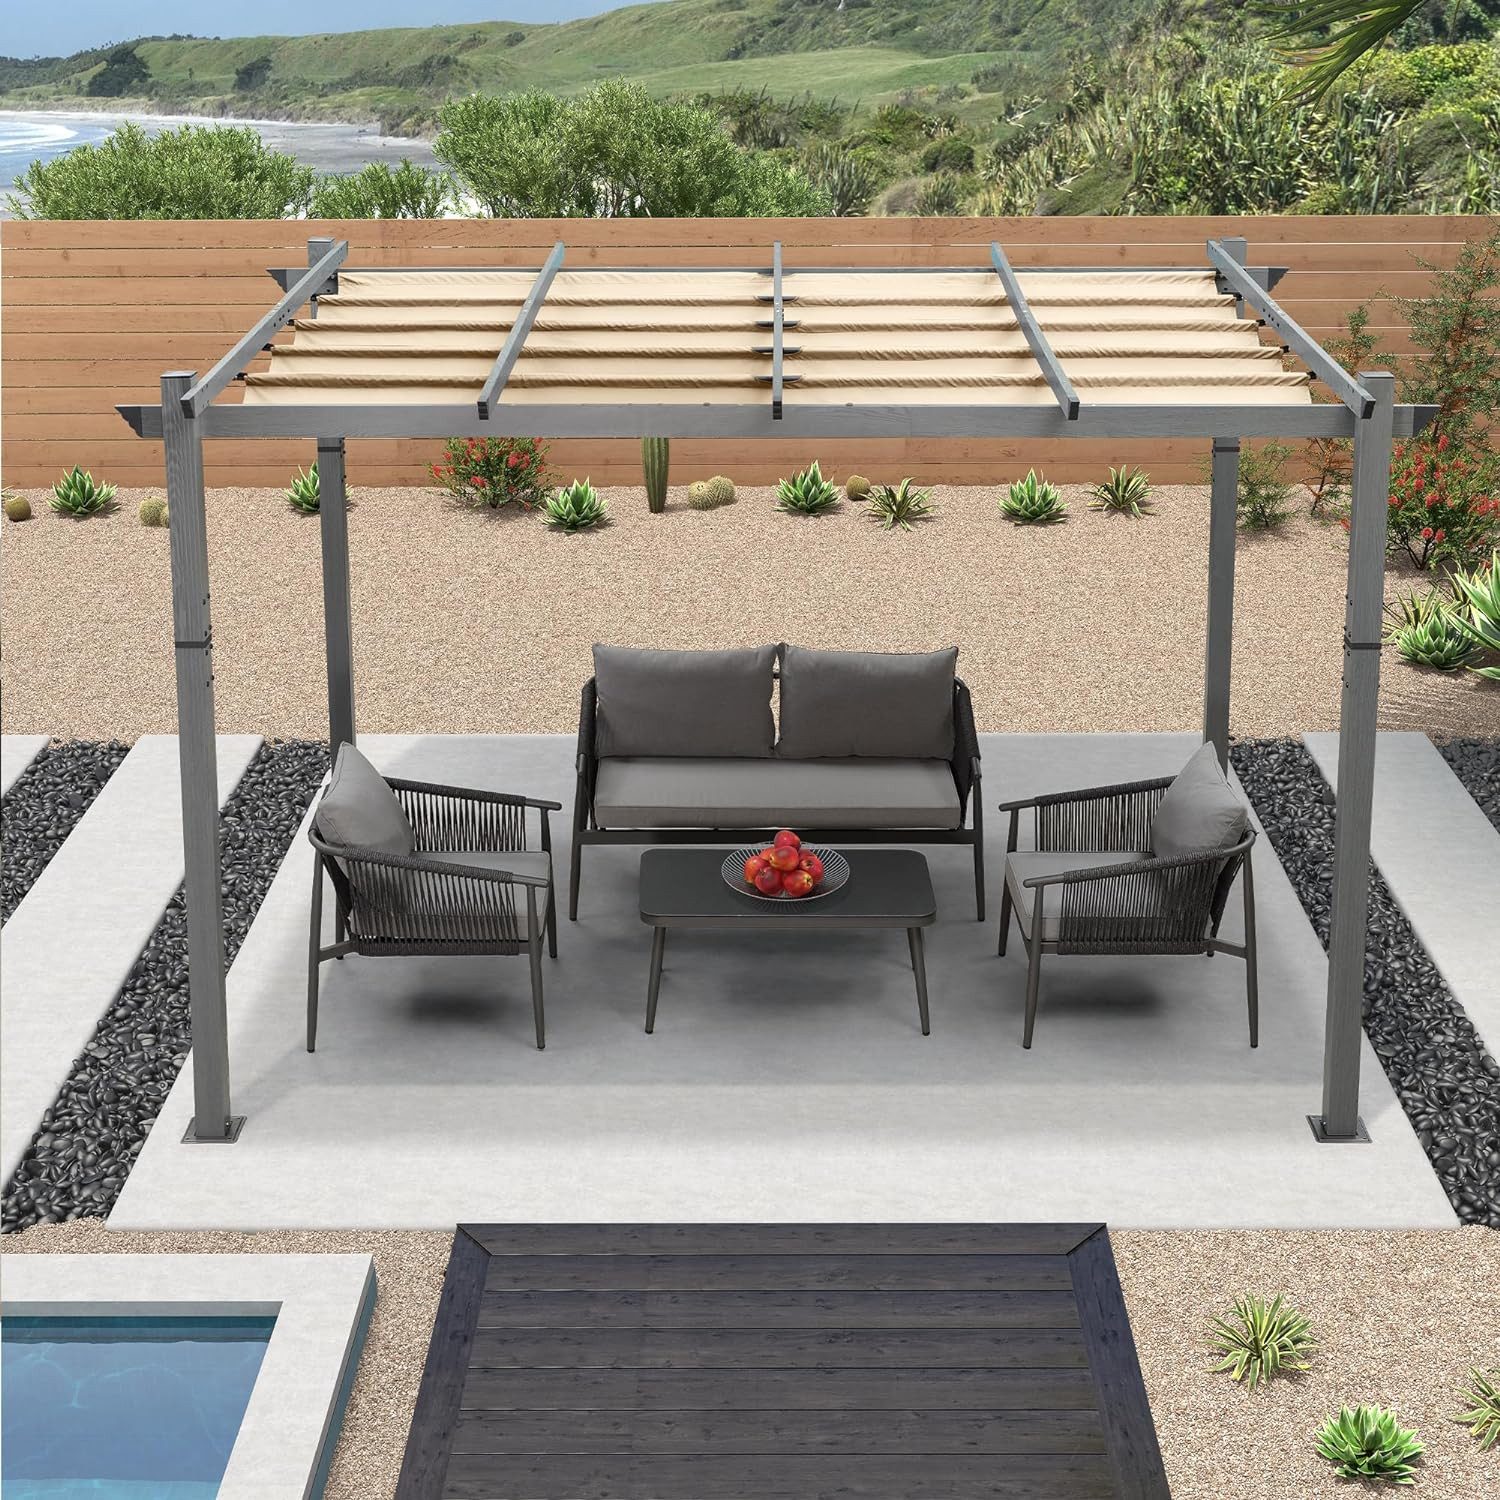 PURPLE LEAF Pergola 3 x 3 m Pergola, Gartenpavillon mit Sonnenschutz Überdachung, Rahmen aus Aluminium mit Holzmaserung, Wasserdicht, stabil